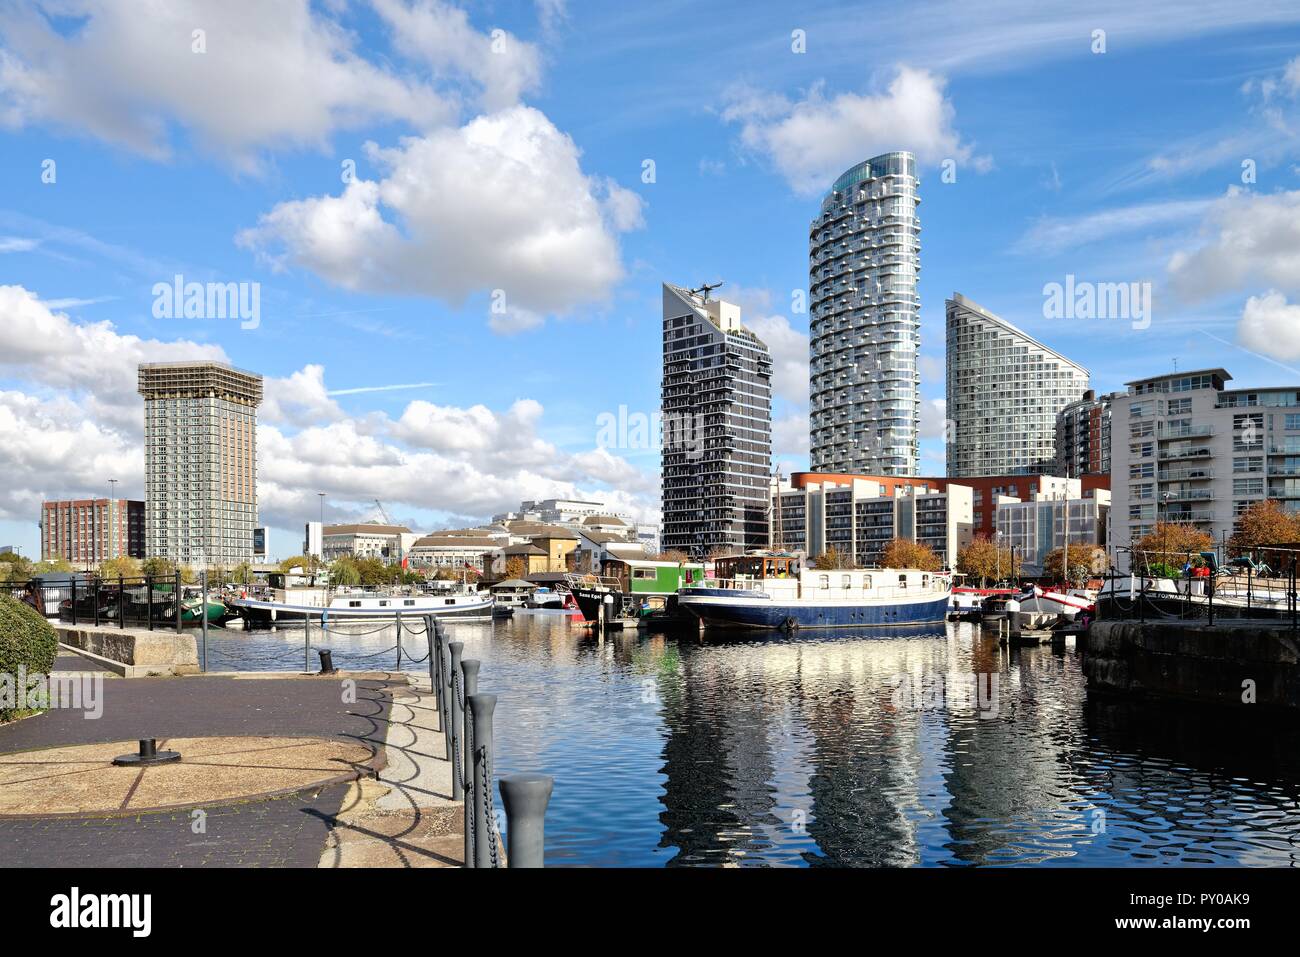 Poplar Dock Marina, Isle of Dogs, Canary Wharf London Docklands England UK Stock Photo